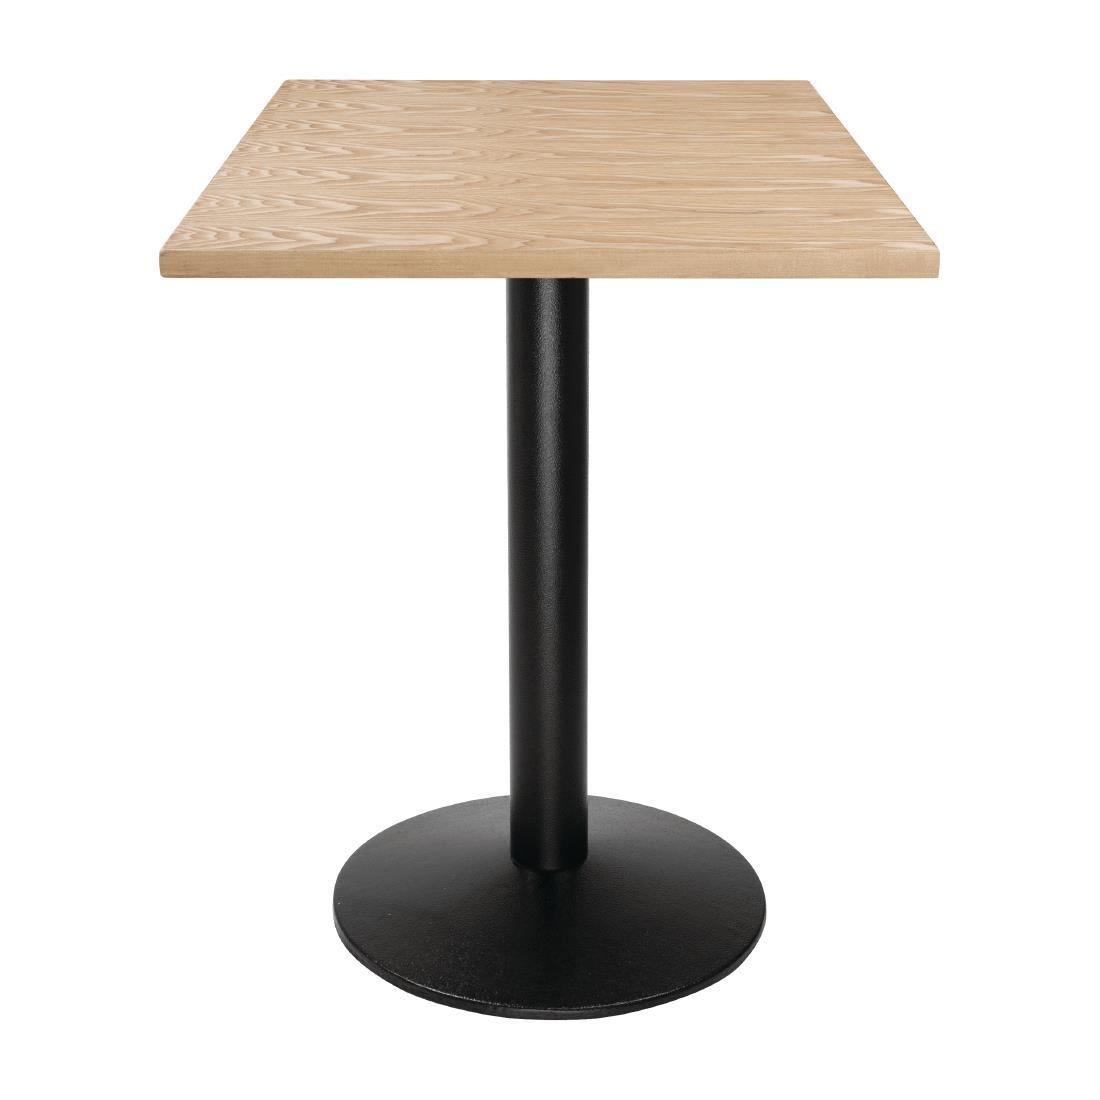 Bolero Pre-drilled Square Table Top Natural Ash Veneer 700mm - DY717  - 5